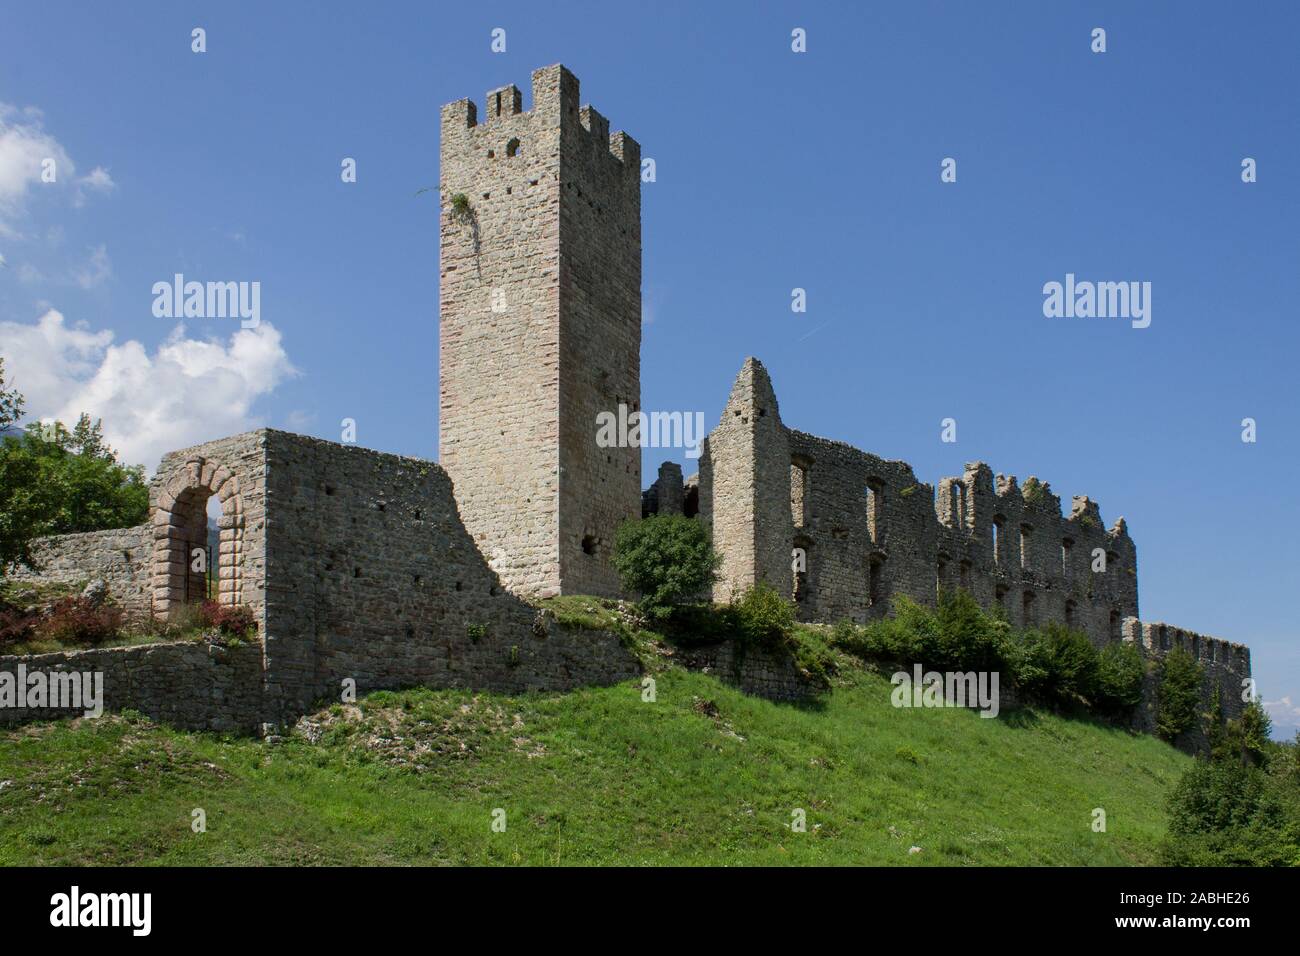 Castello di Belfort in trentino - Belfort castle in trentino italy Stock Photo